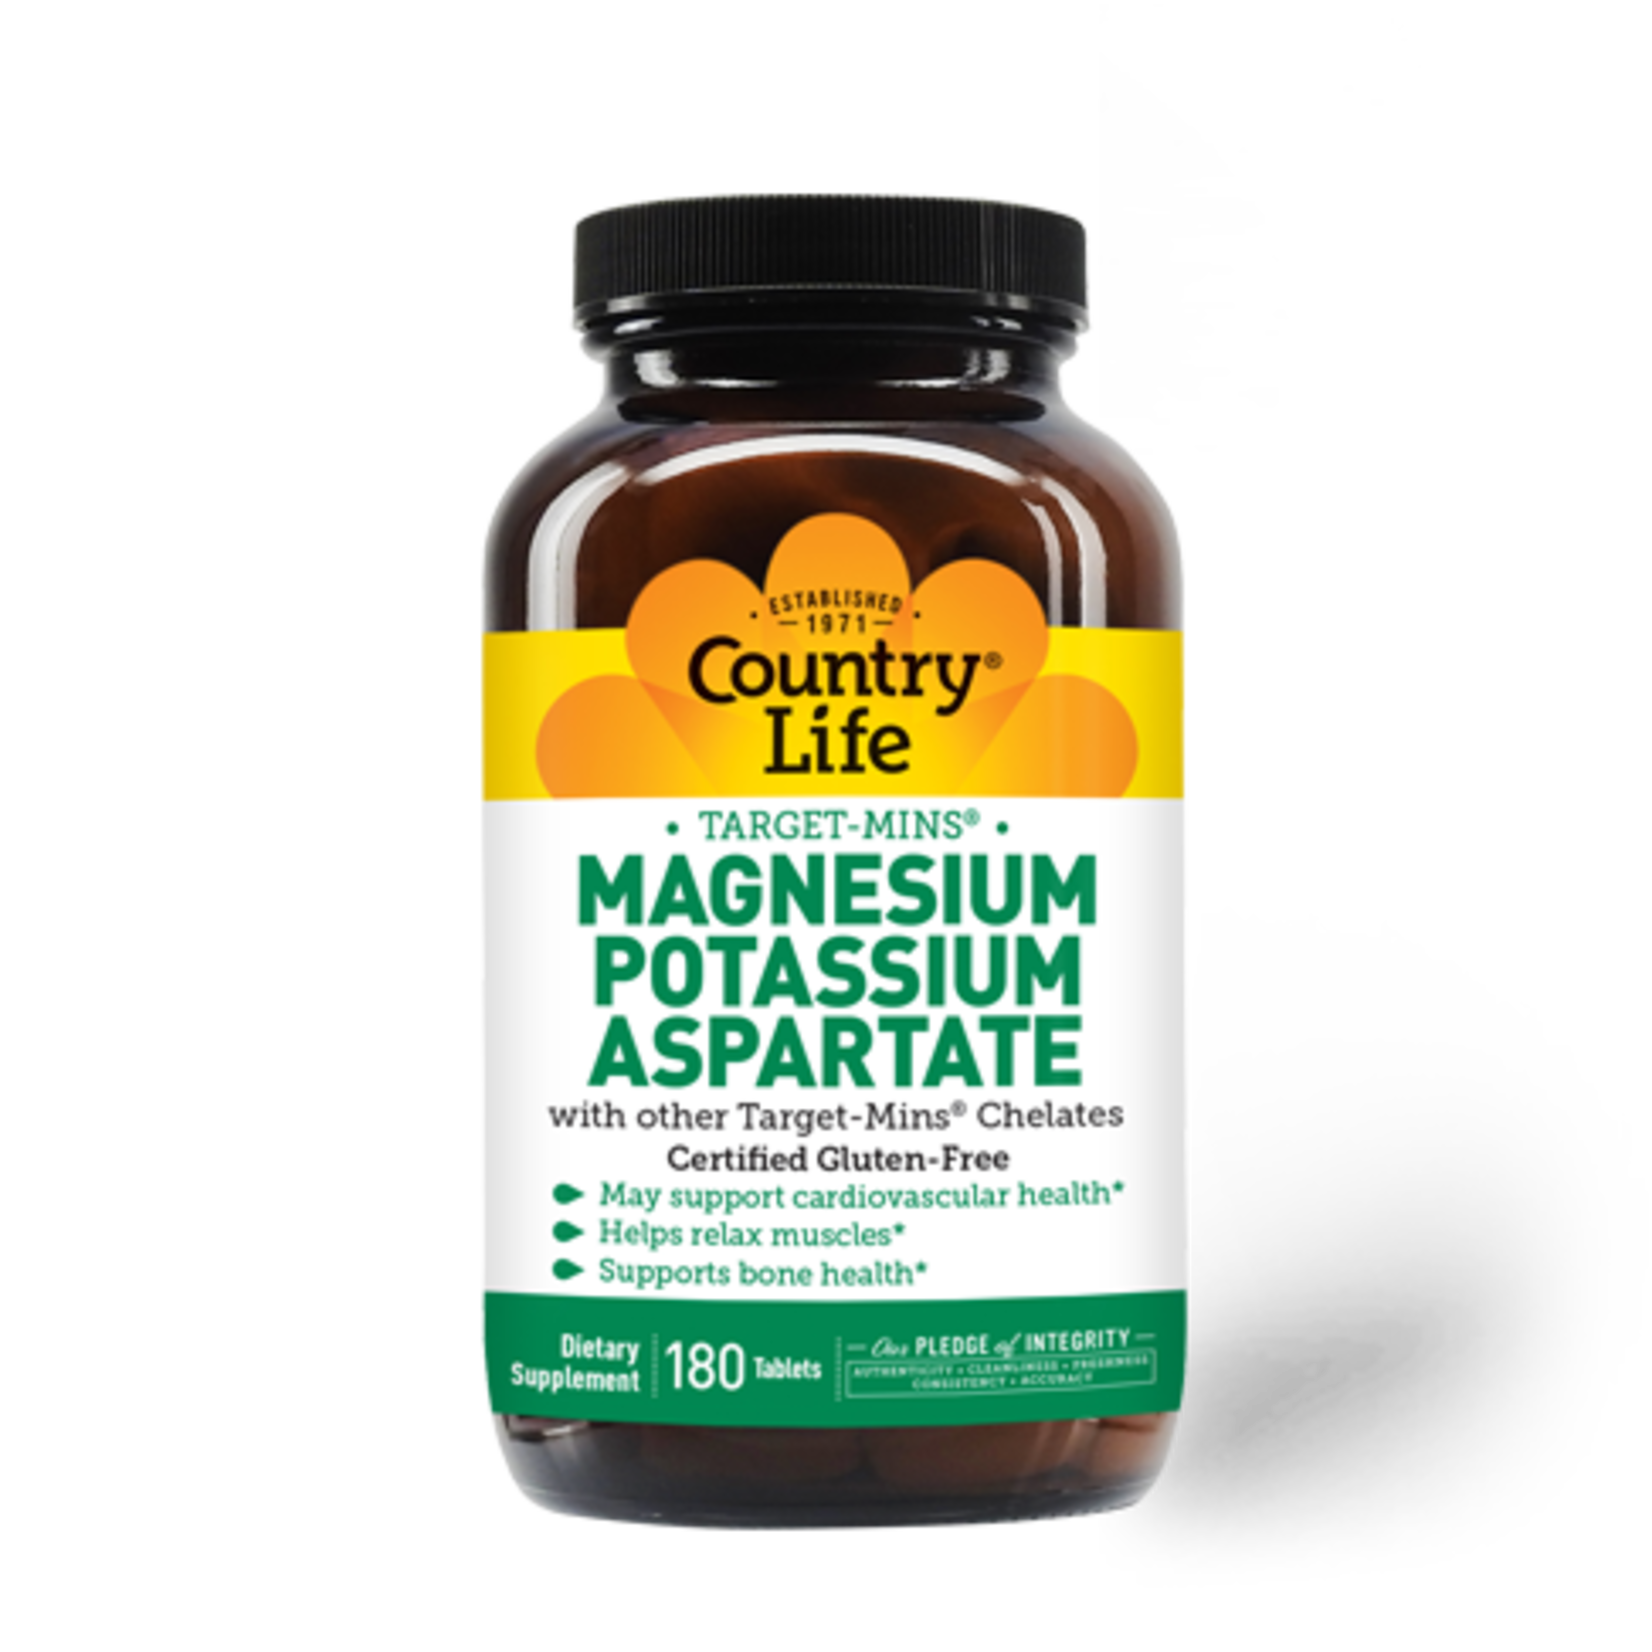 Country Life Country Life - Magnesium Potassium Aspartate - 180 Tablets